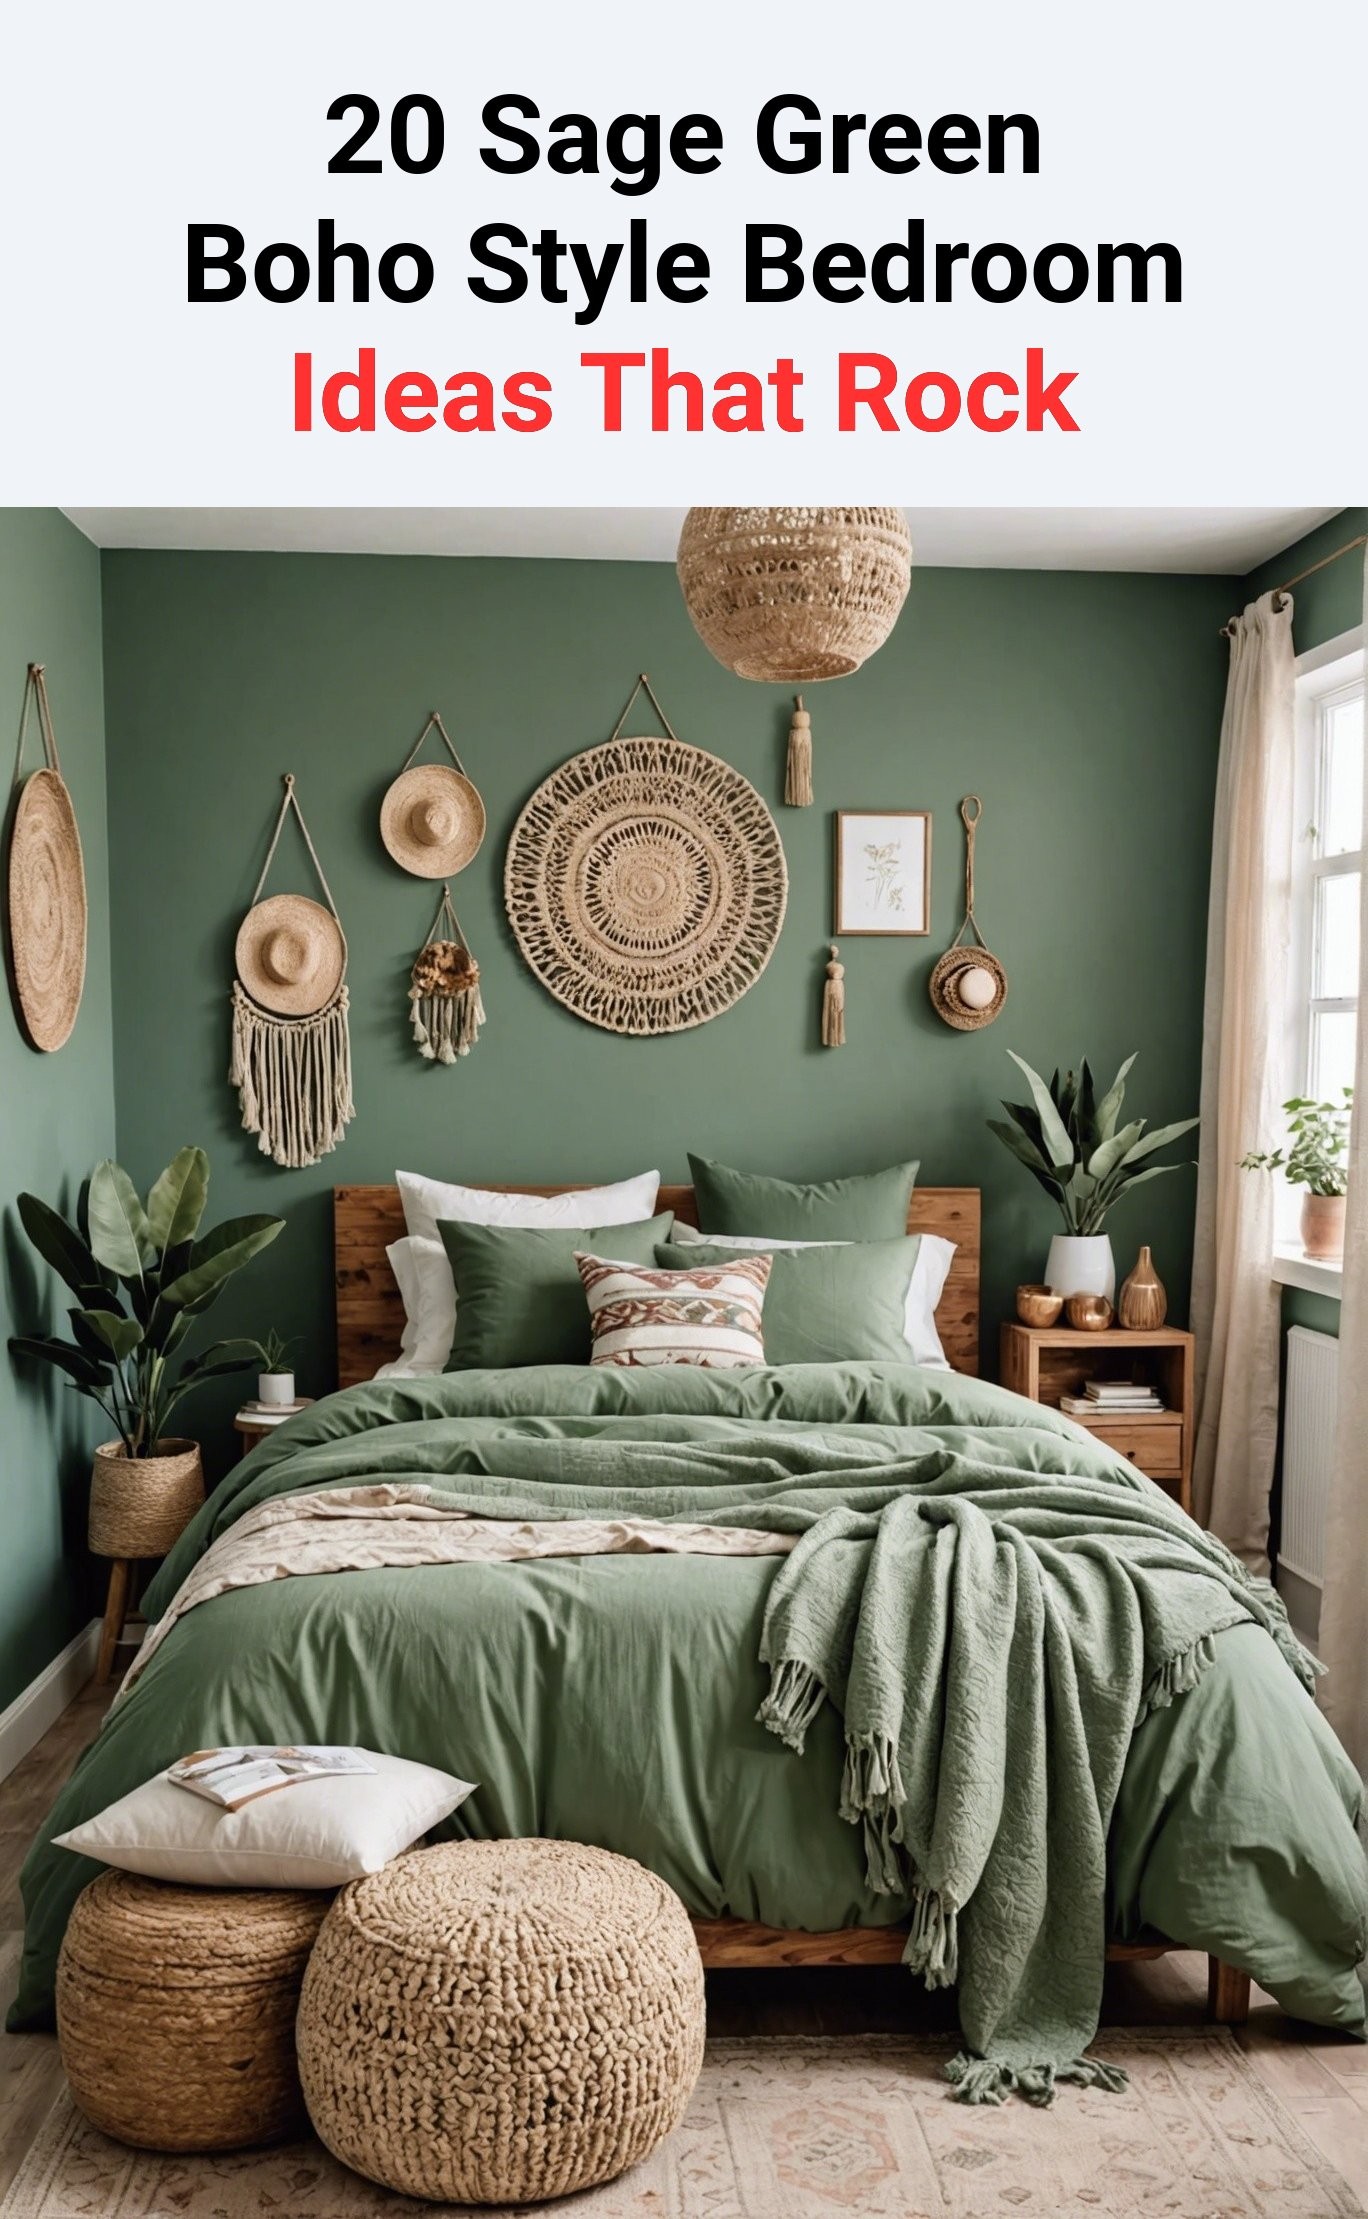 20 Sage Green Boho Style Bedroom Ideas That Rock